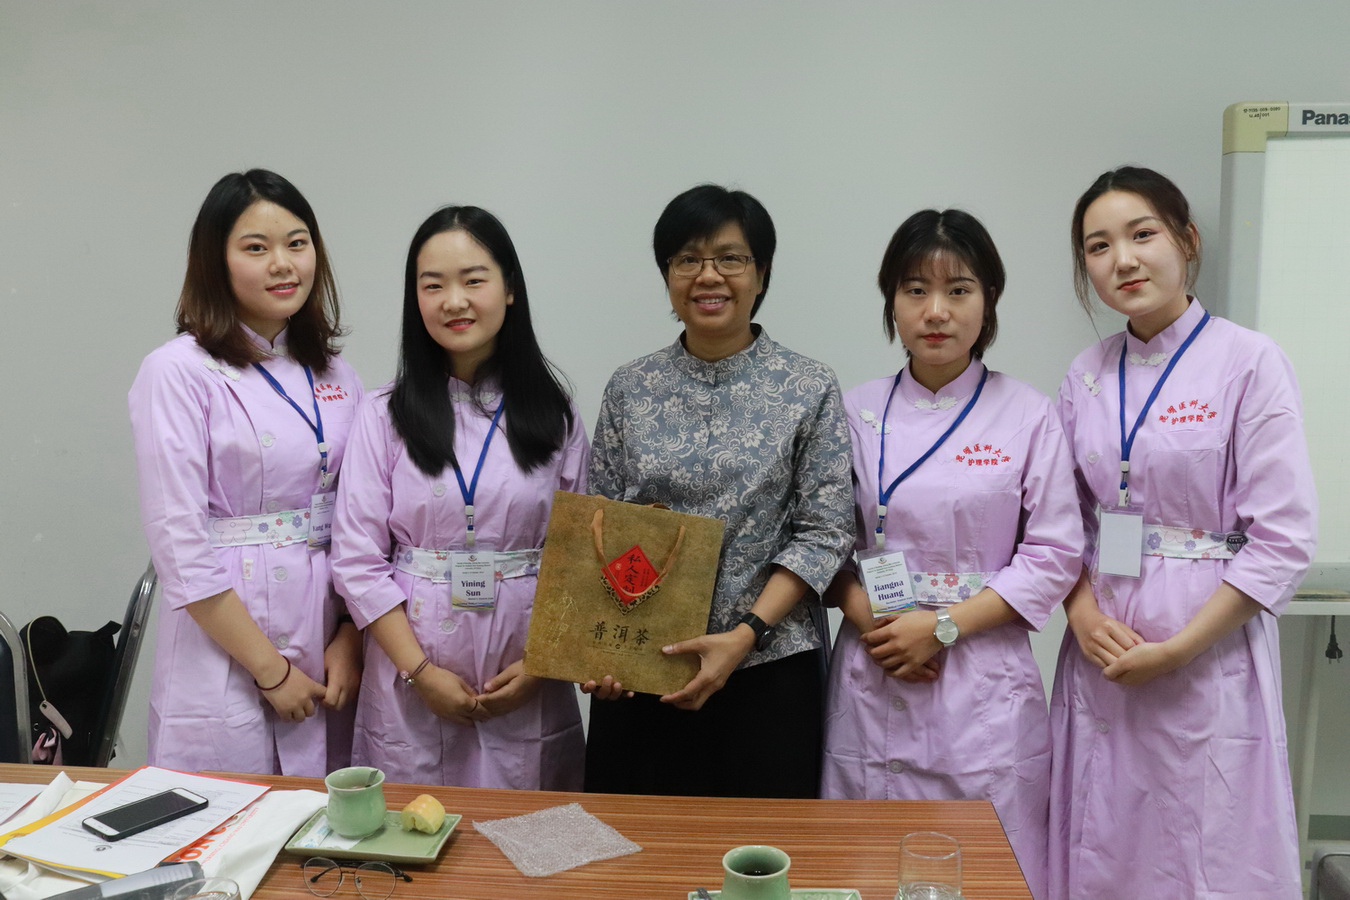 <div>
	ต้อนรับนักศึกษาพยาบาลจาก Kunming Medical University สาธารณรัฐประชาชนจีน</div>
